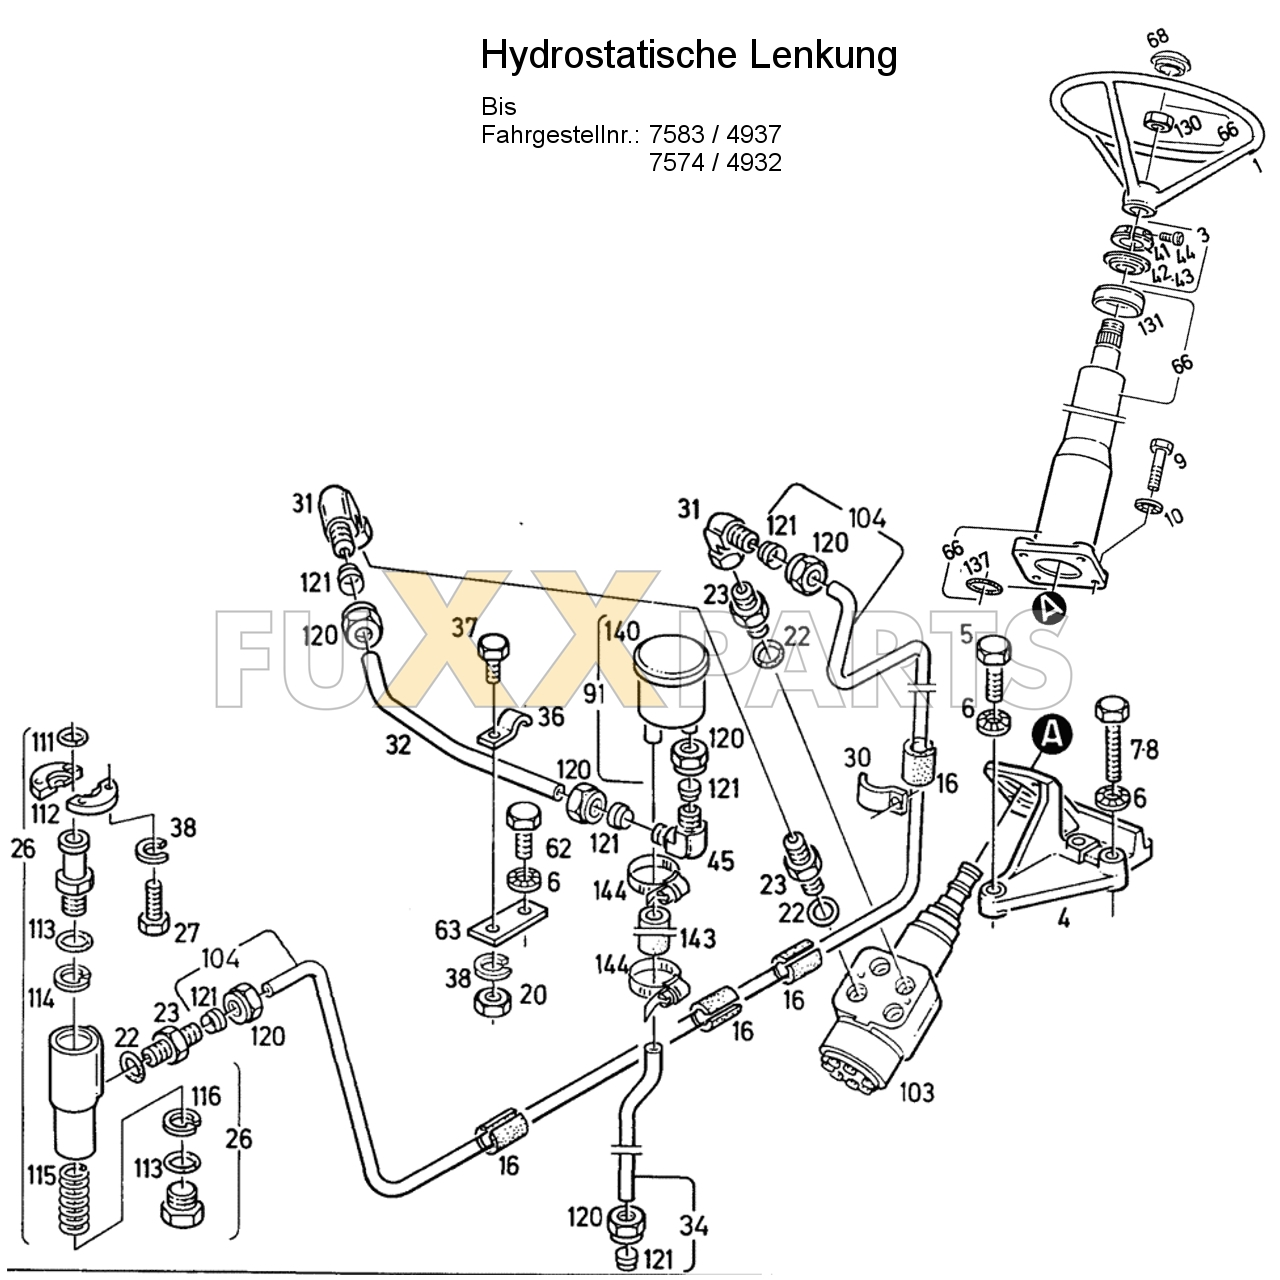 D 7207 Hydrostatische Lenkung 1.1